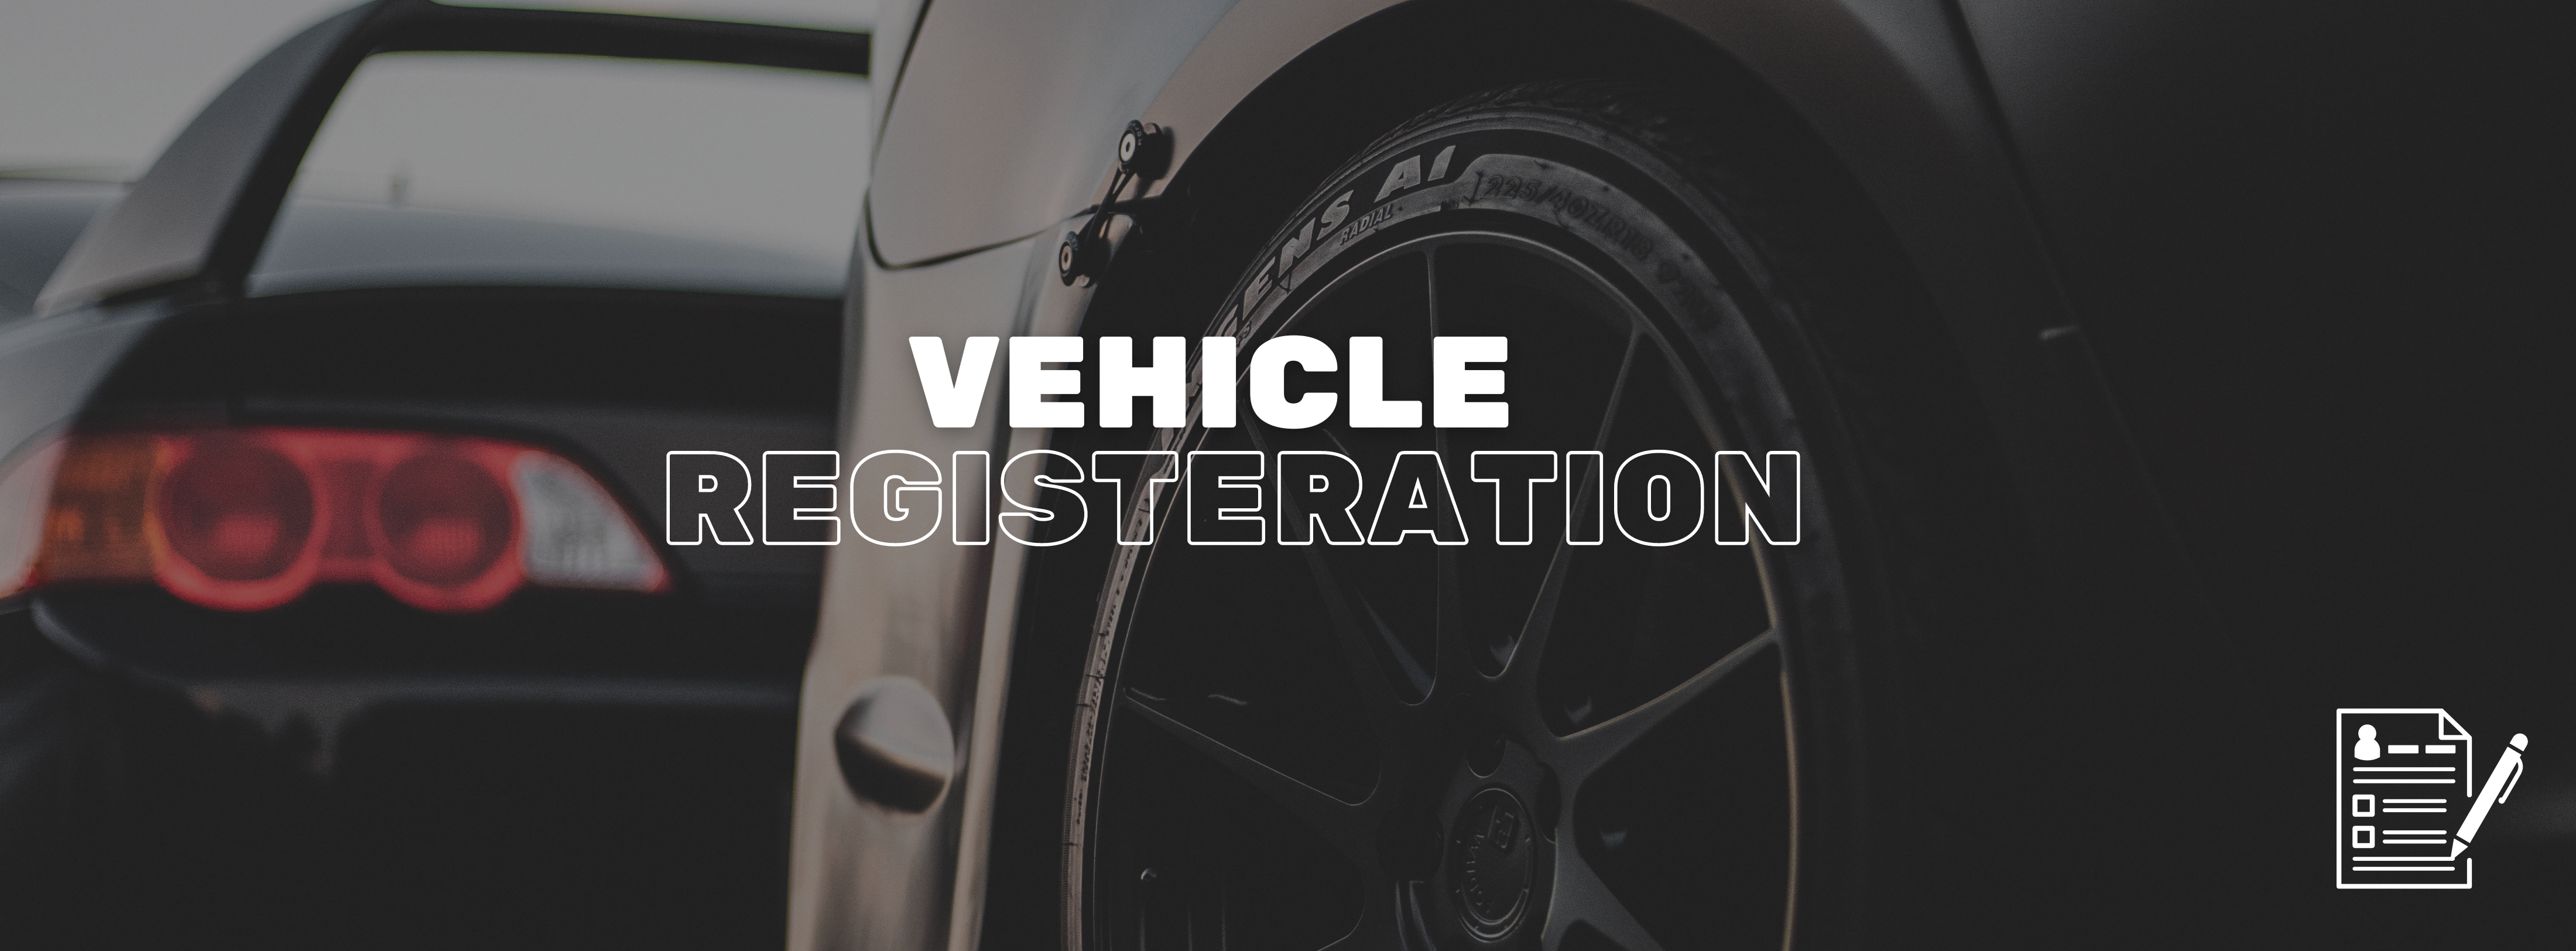 vehicle registeration